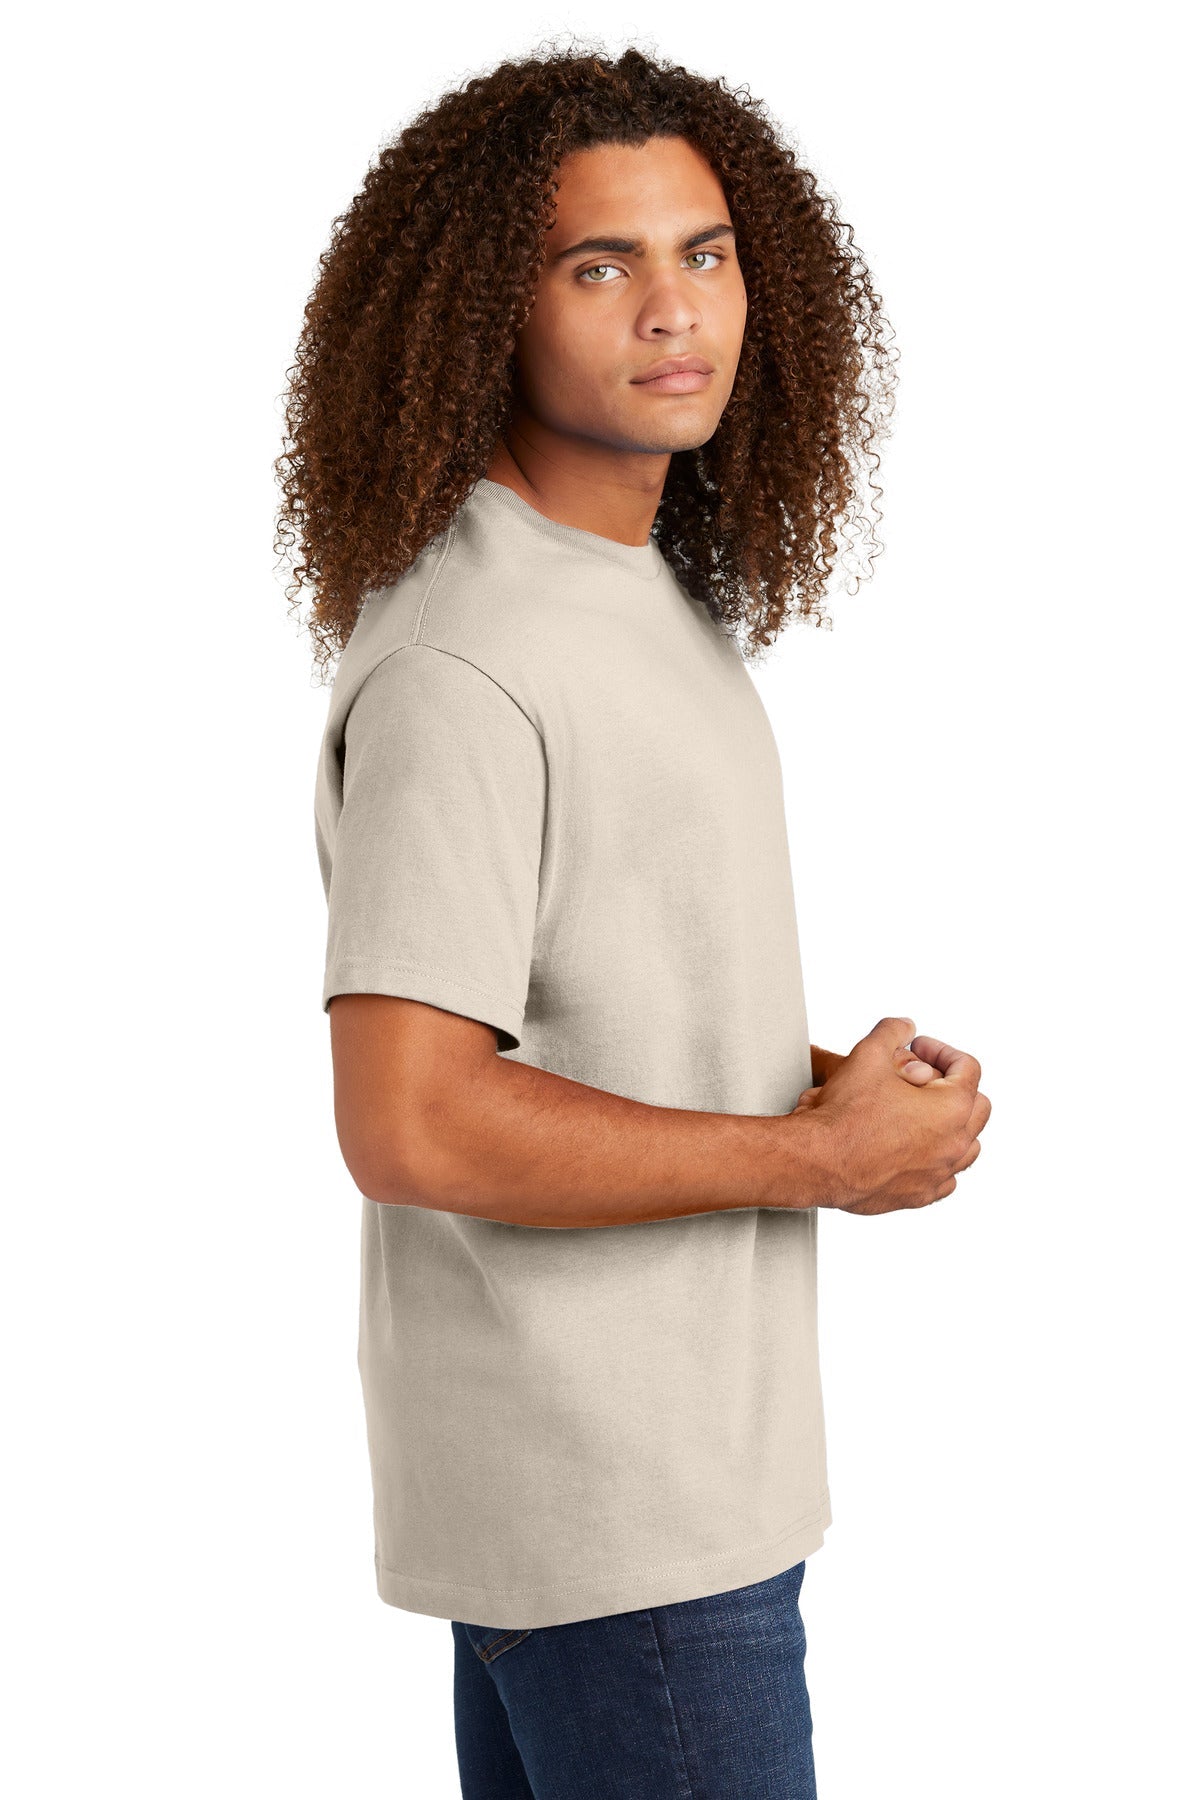 American Apparel® Relaxed T-Shirt 1301W [Cream] – DFW Impression